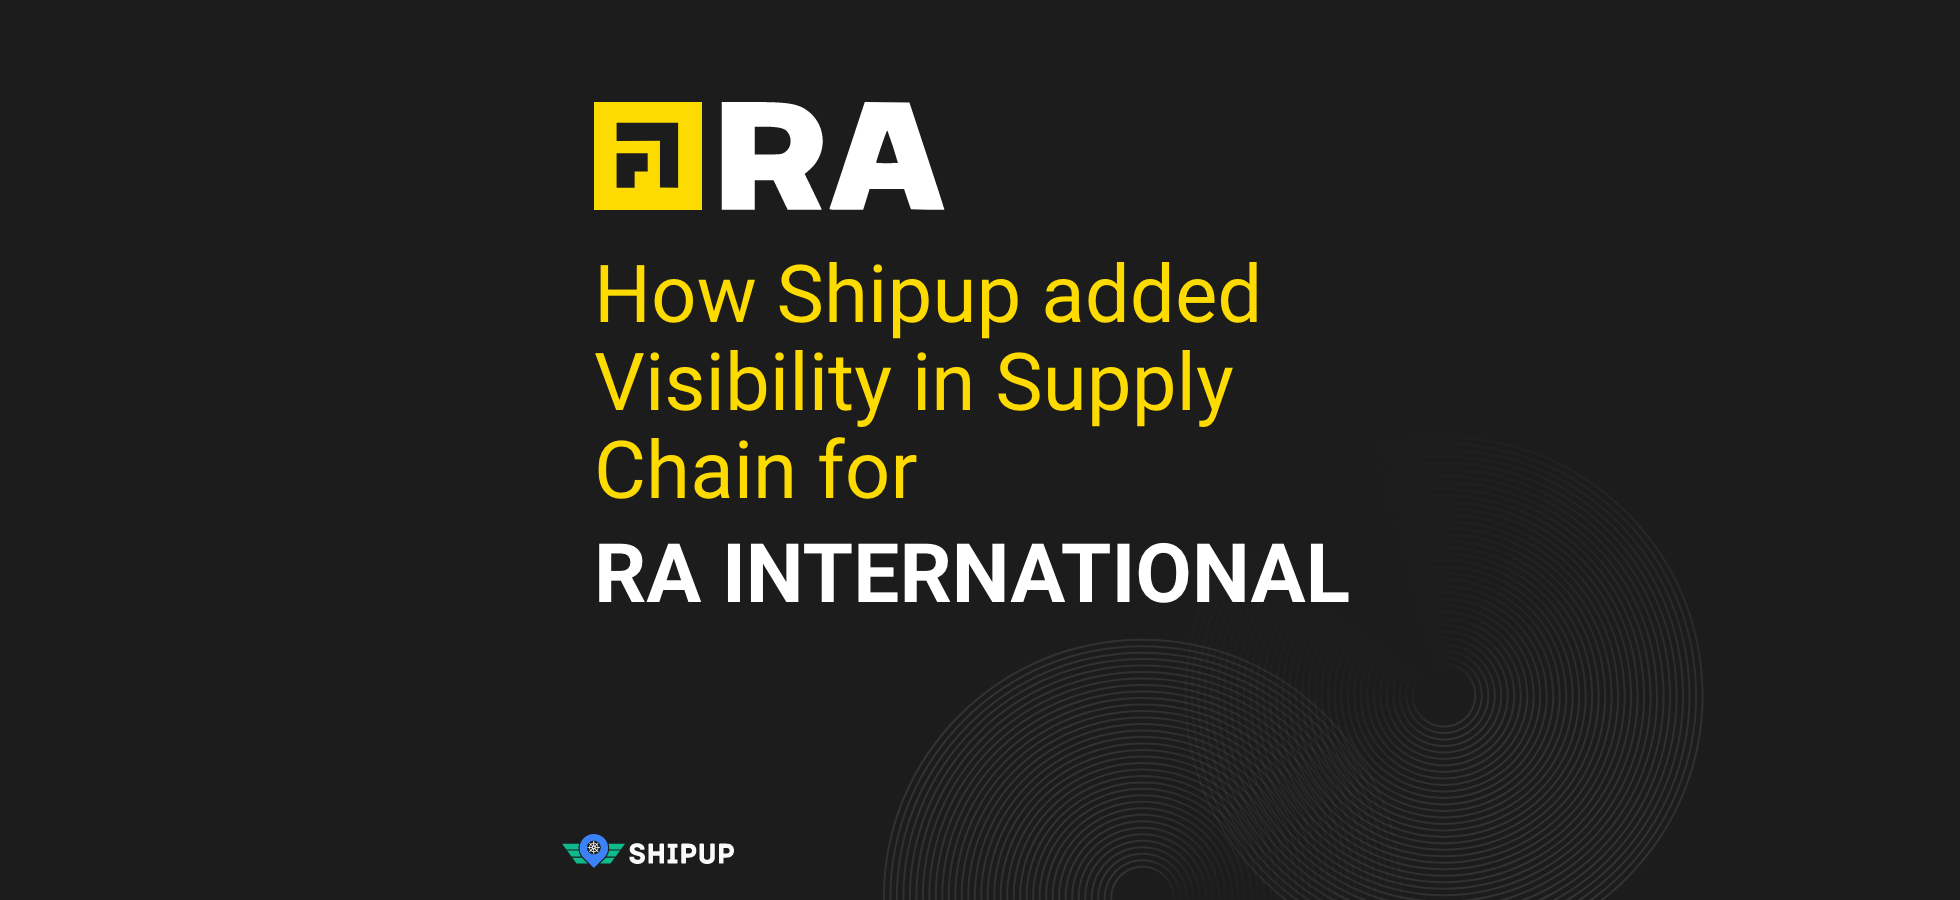 RA International logistics company has improved its business efficiency using Shipup visibility platform.